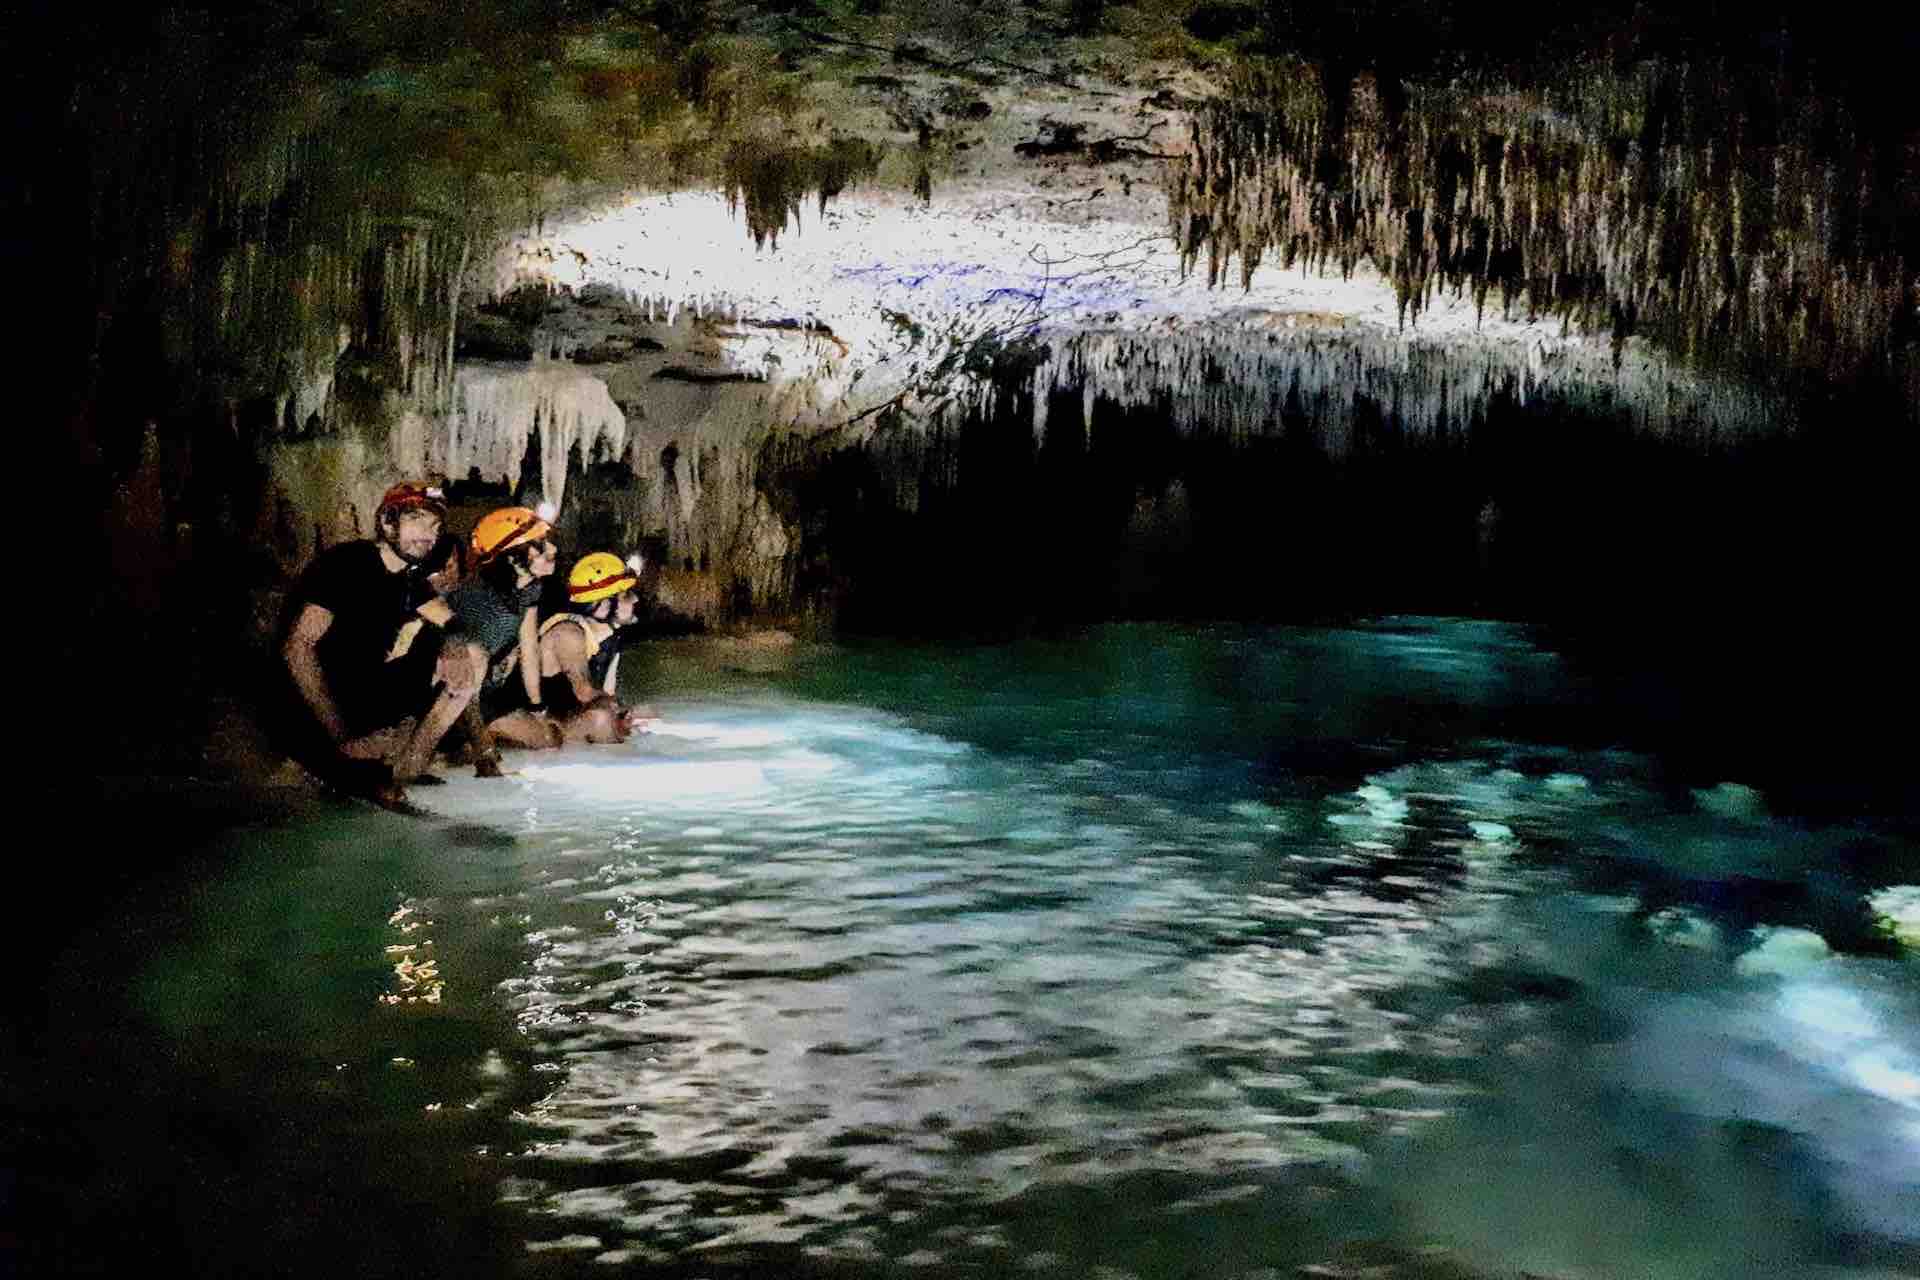 Cenote Riviera Maya Mexico Rivera Maya Tulum Playa del carmen cenote tour guests in cave